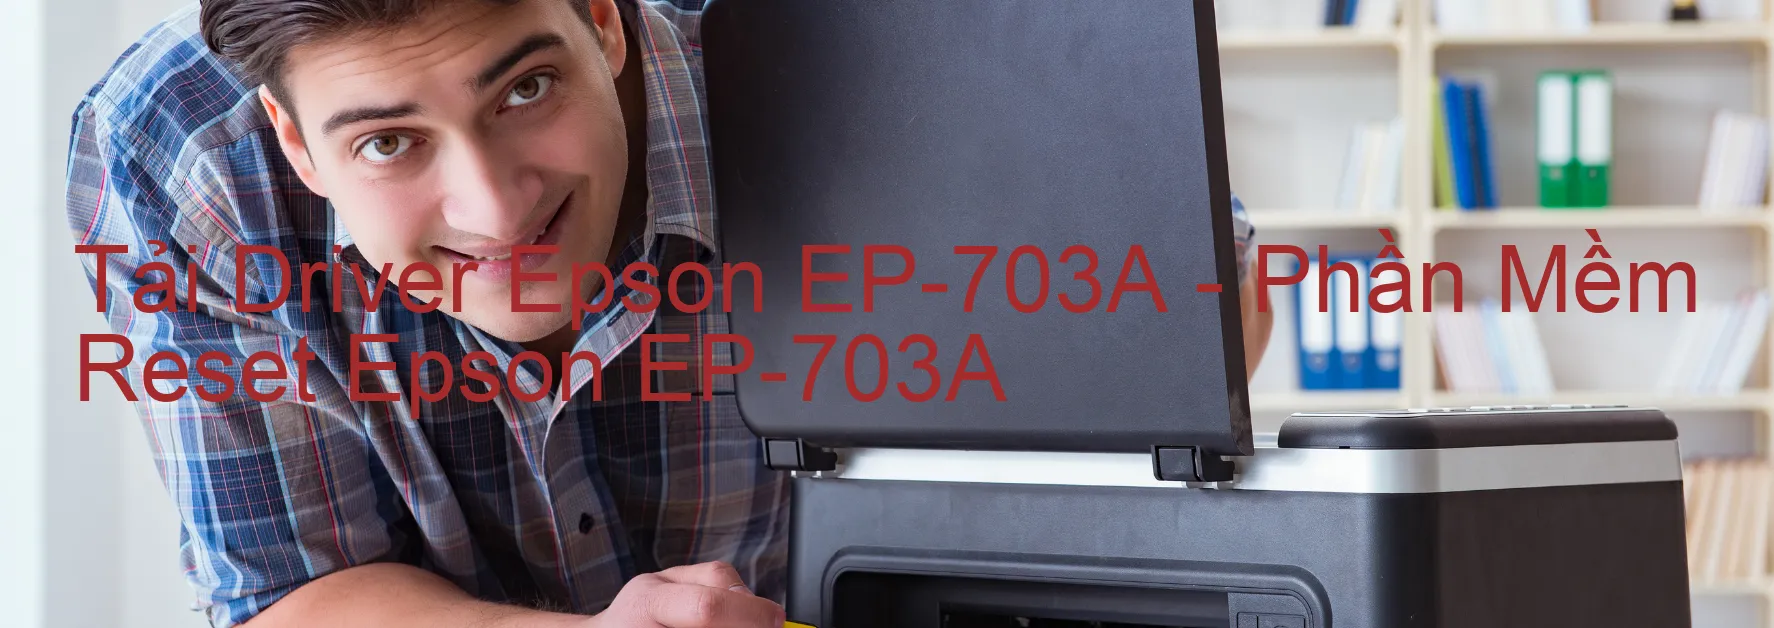 Driver Epson EP-703A, Phần Mềm Reset Epson EP-703A